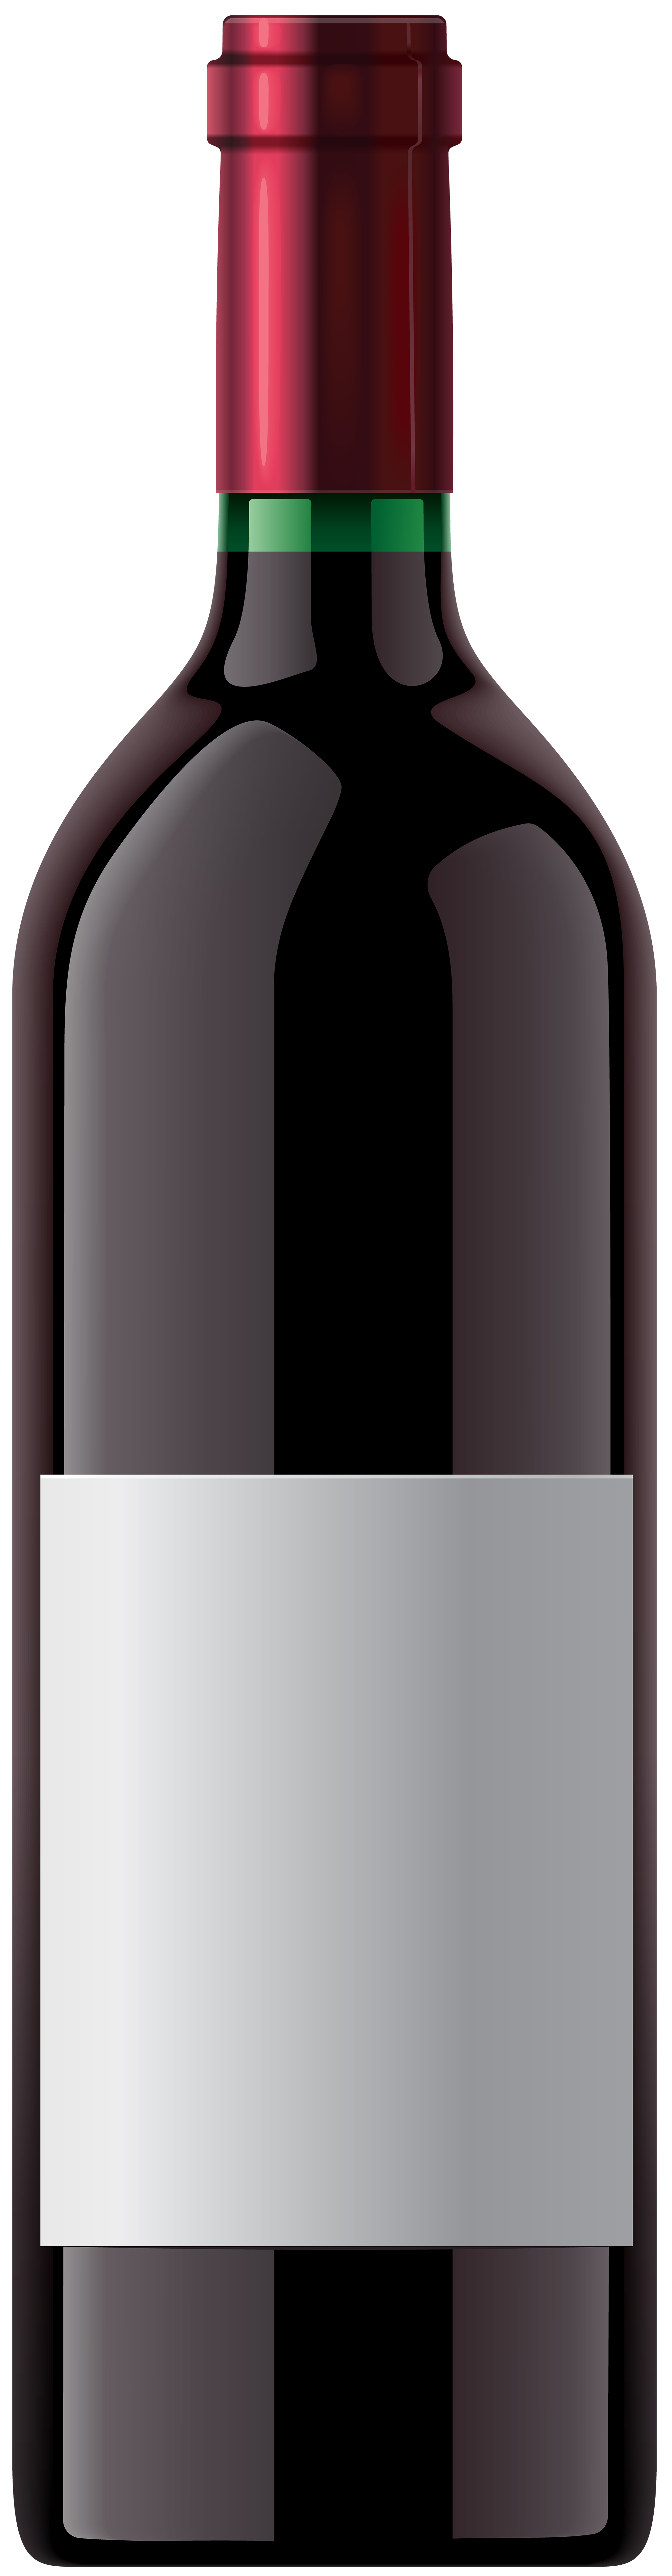 Wine Bottle PNG HD Image